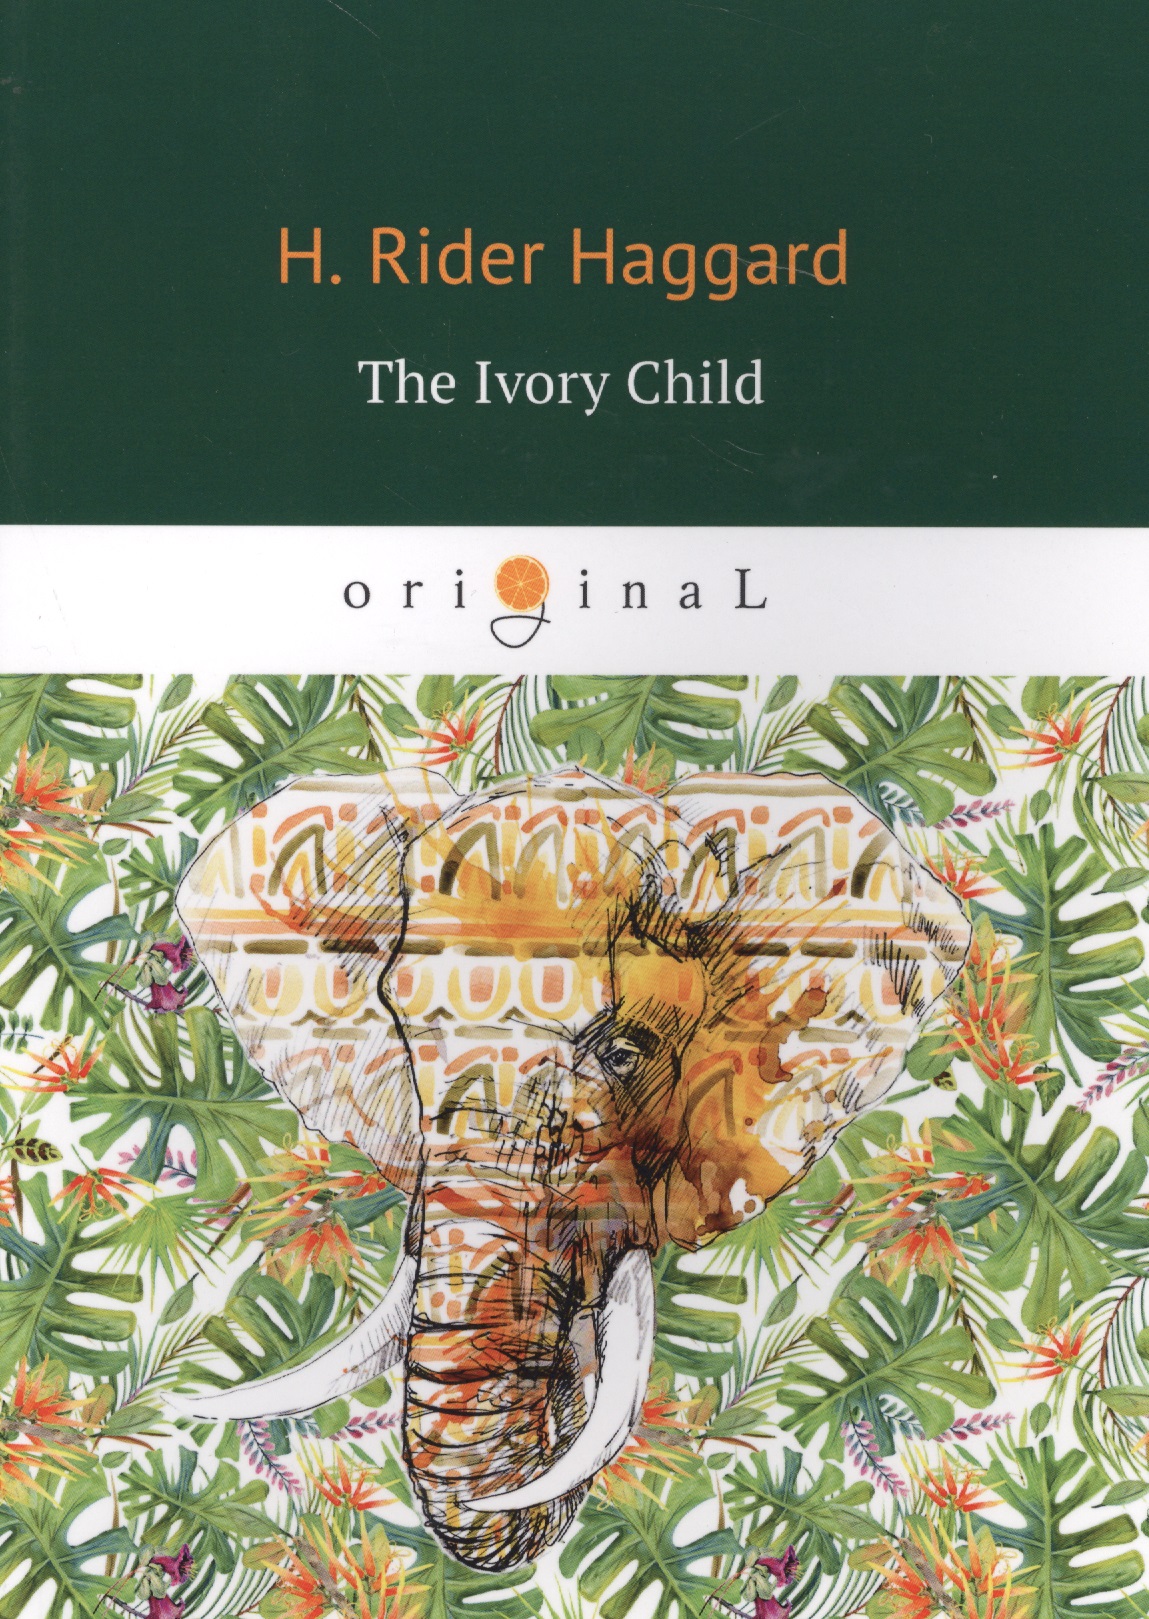 хаггард генри райдер nada the lily нада на английском языке Хаггард Генри Райдер The Ivory Child = Дитя слоновой кости: на английском языке